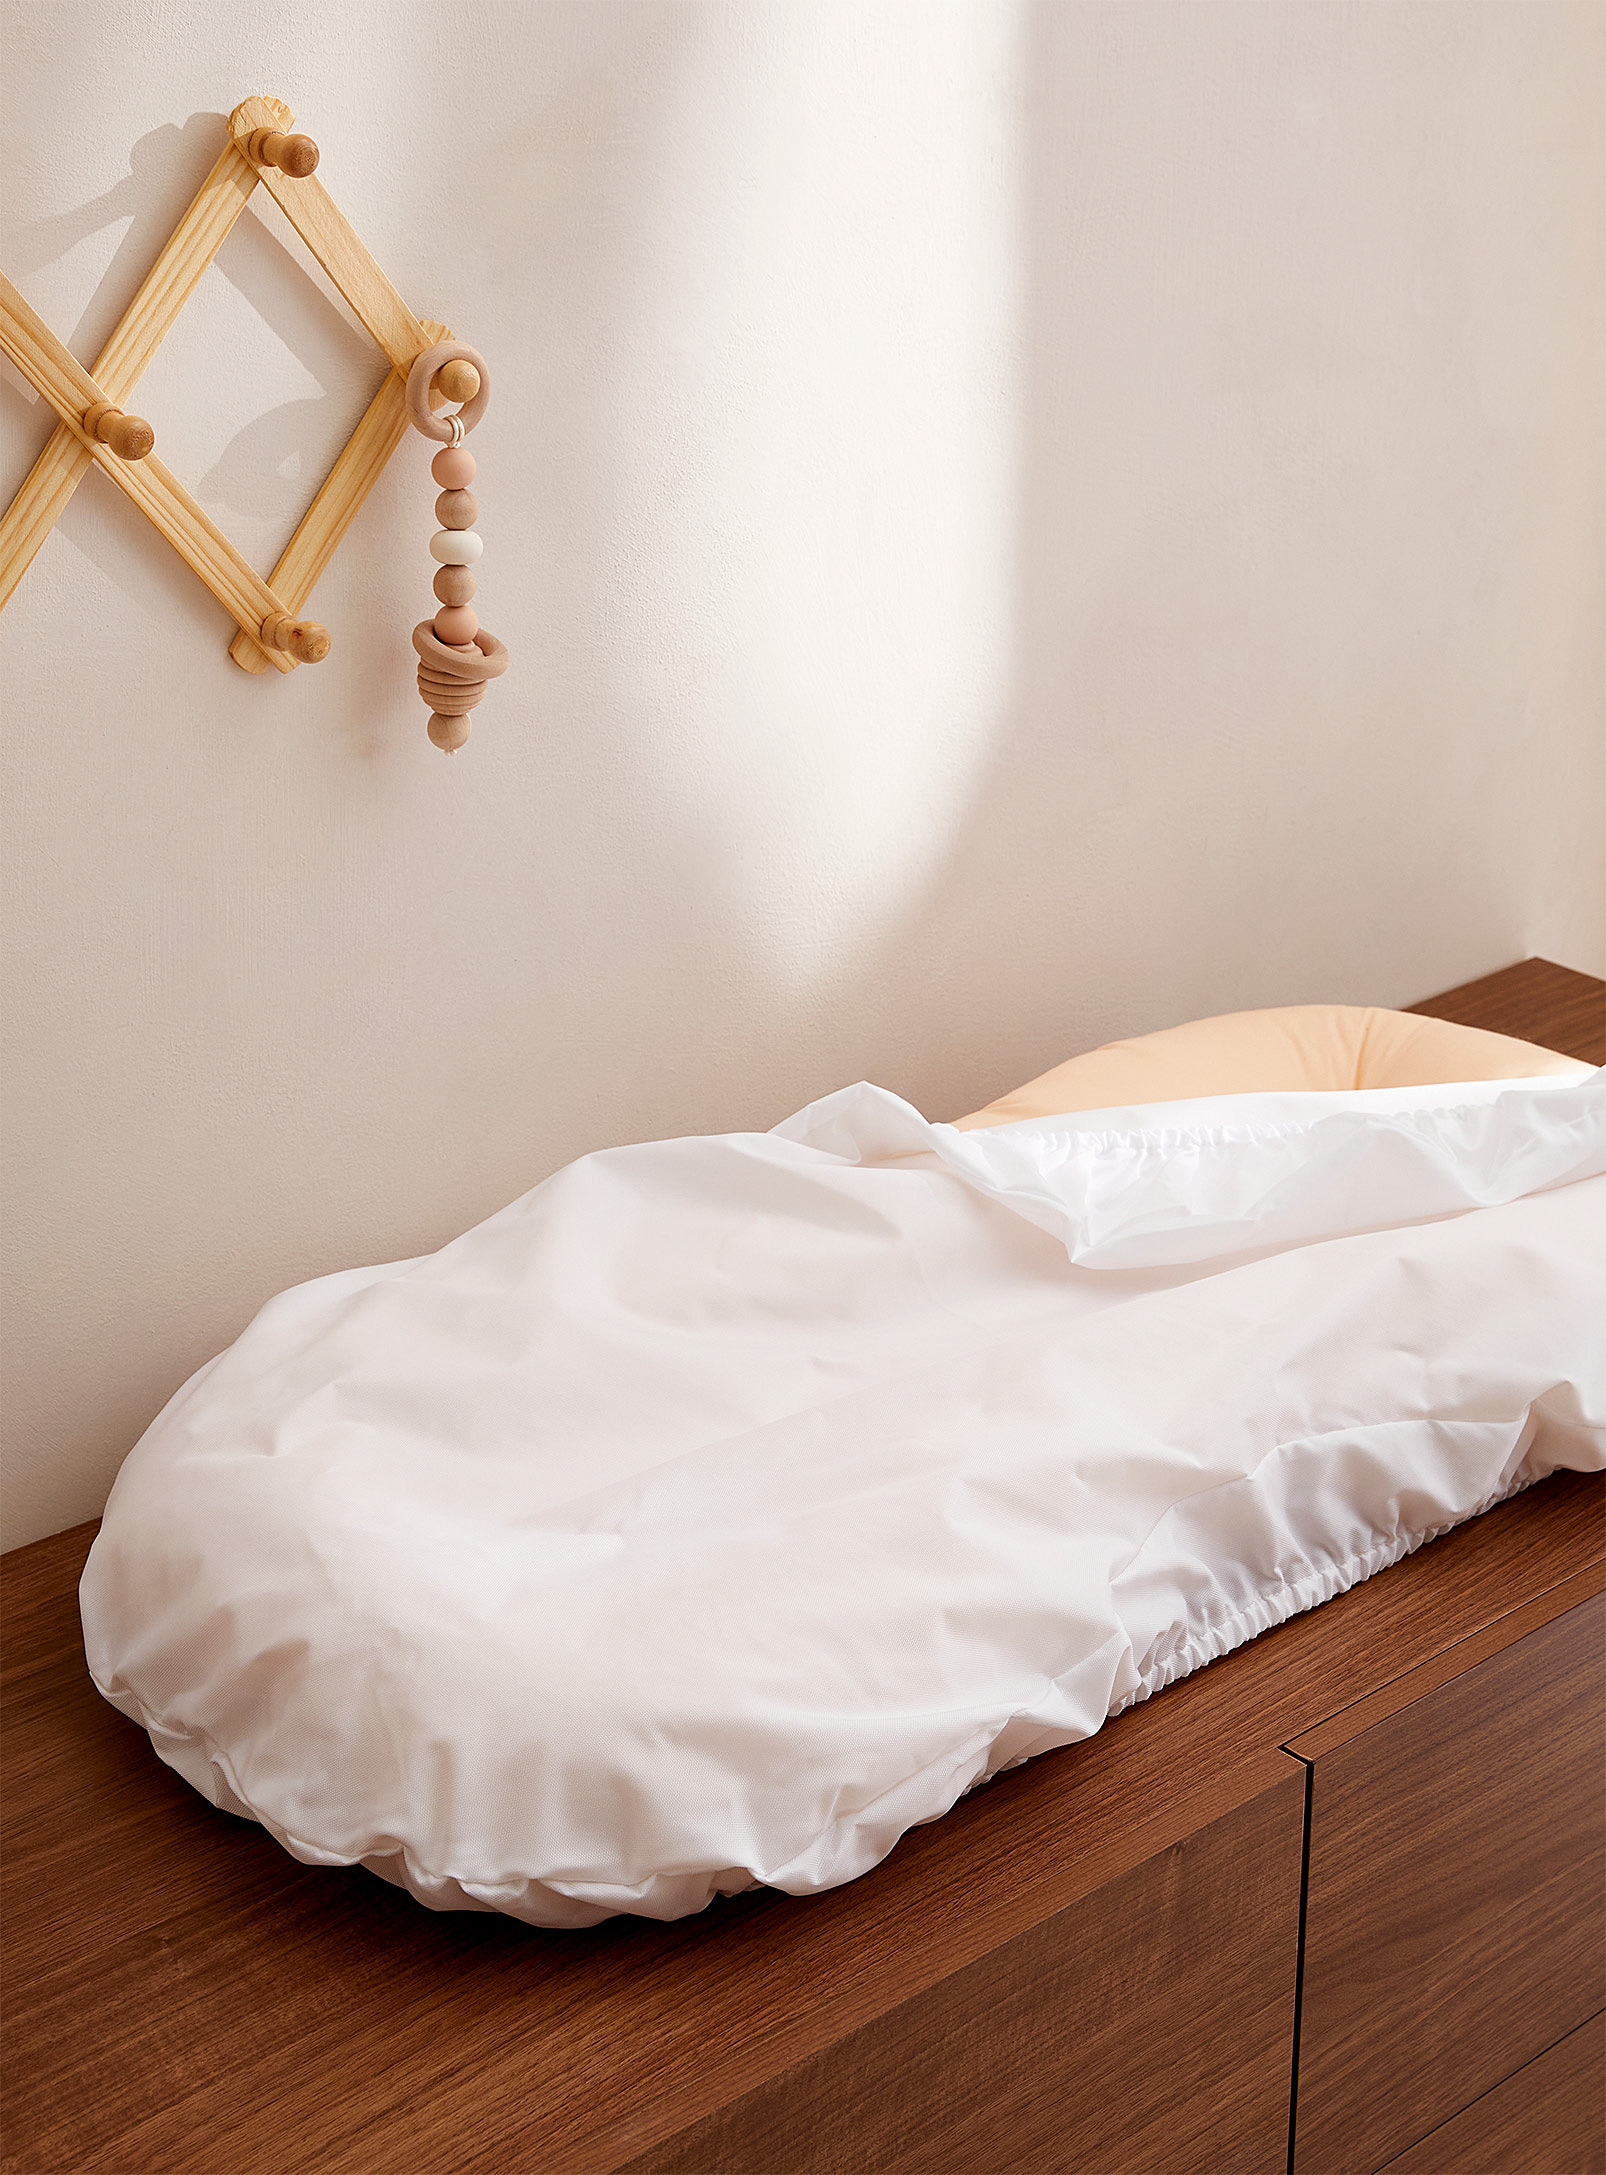 Sleeptight - Waterproof body cushion sheet 0-9 months